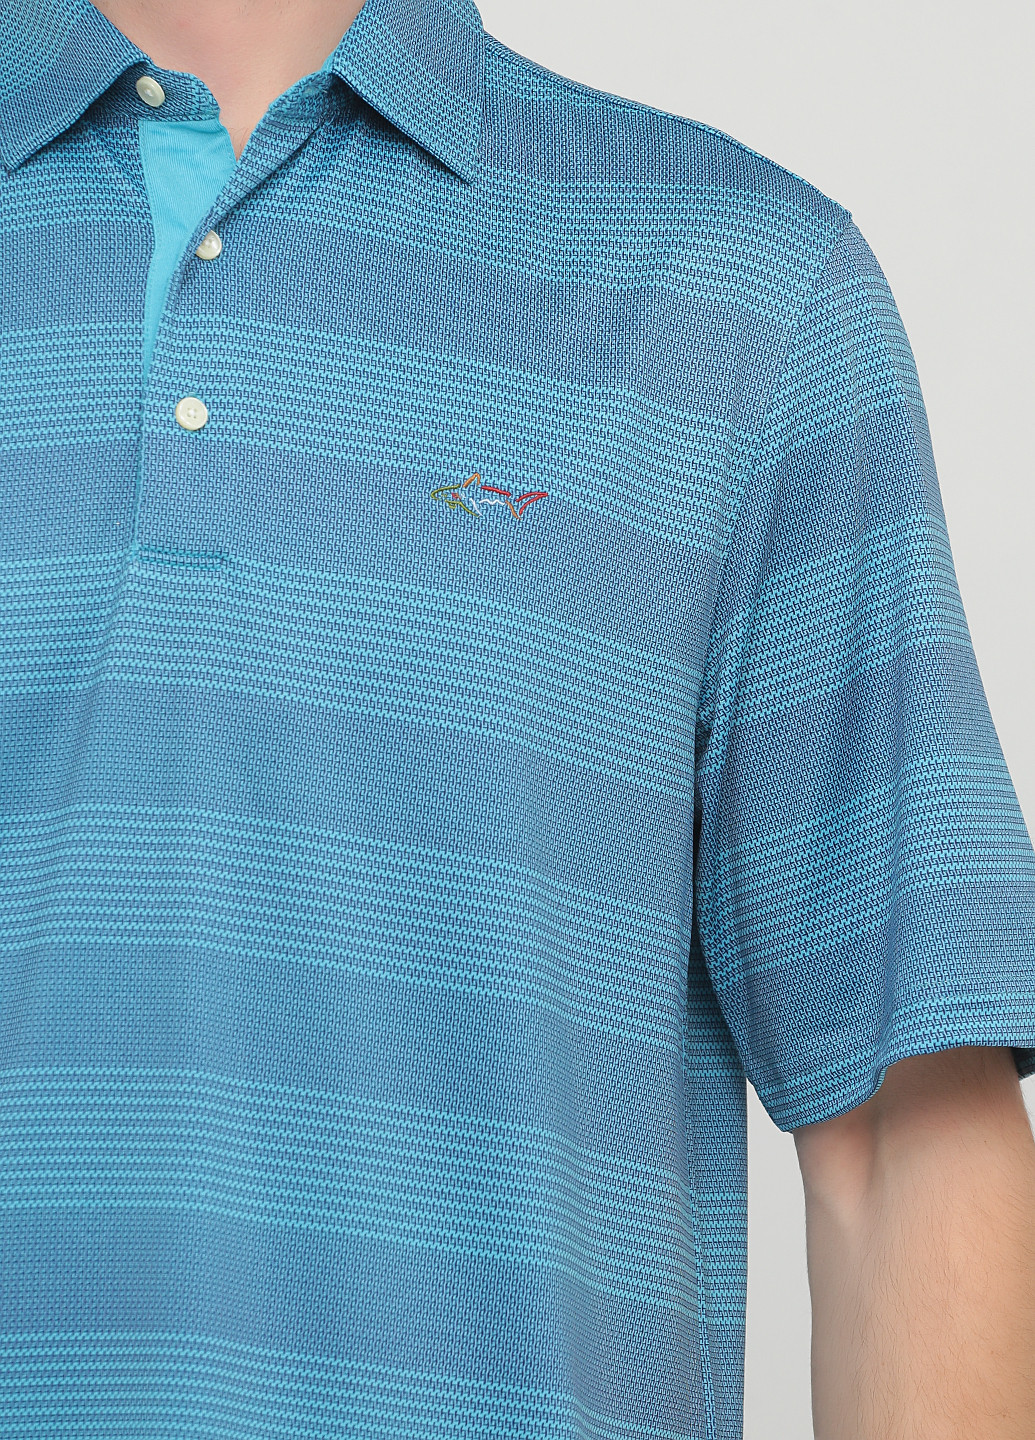 Голубой футболка-поло для мужчин Greg Norman с геометрическим узором